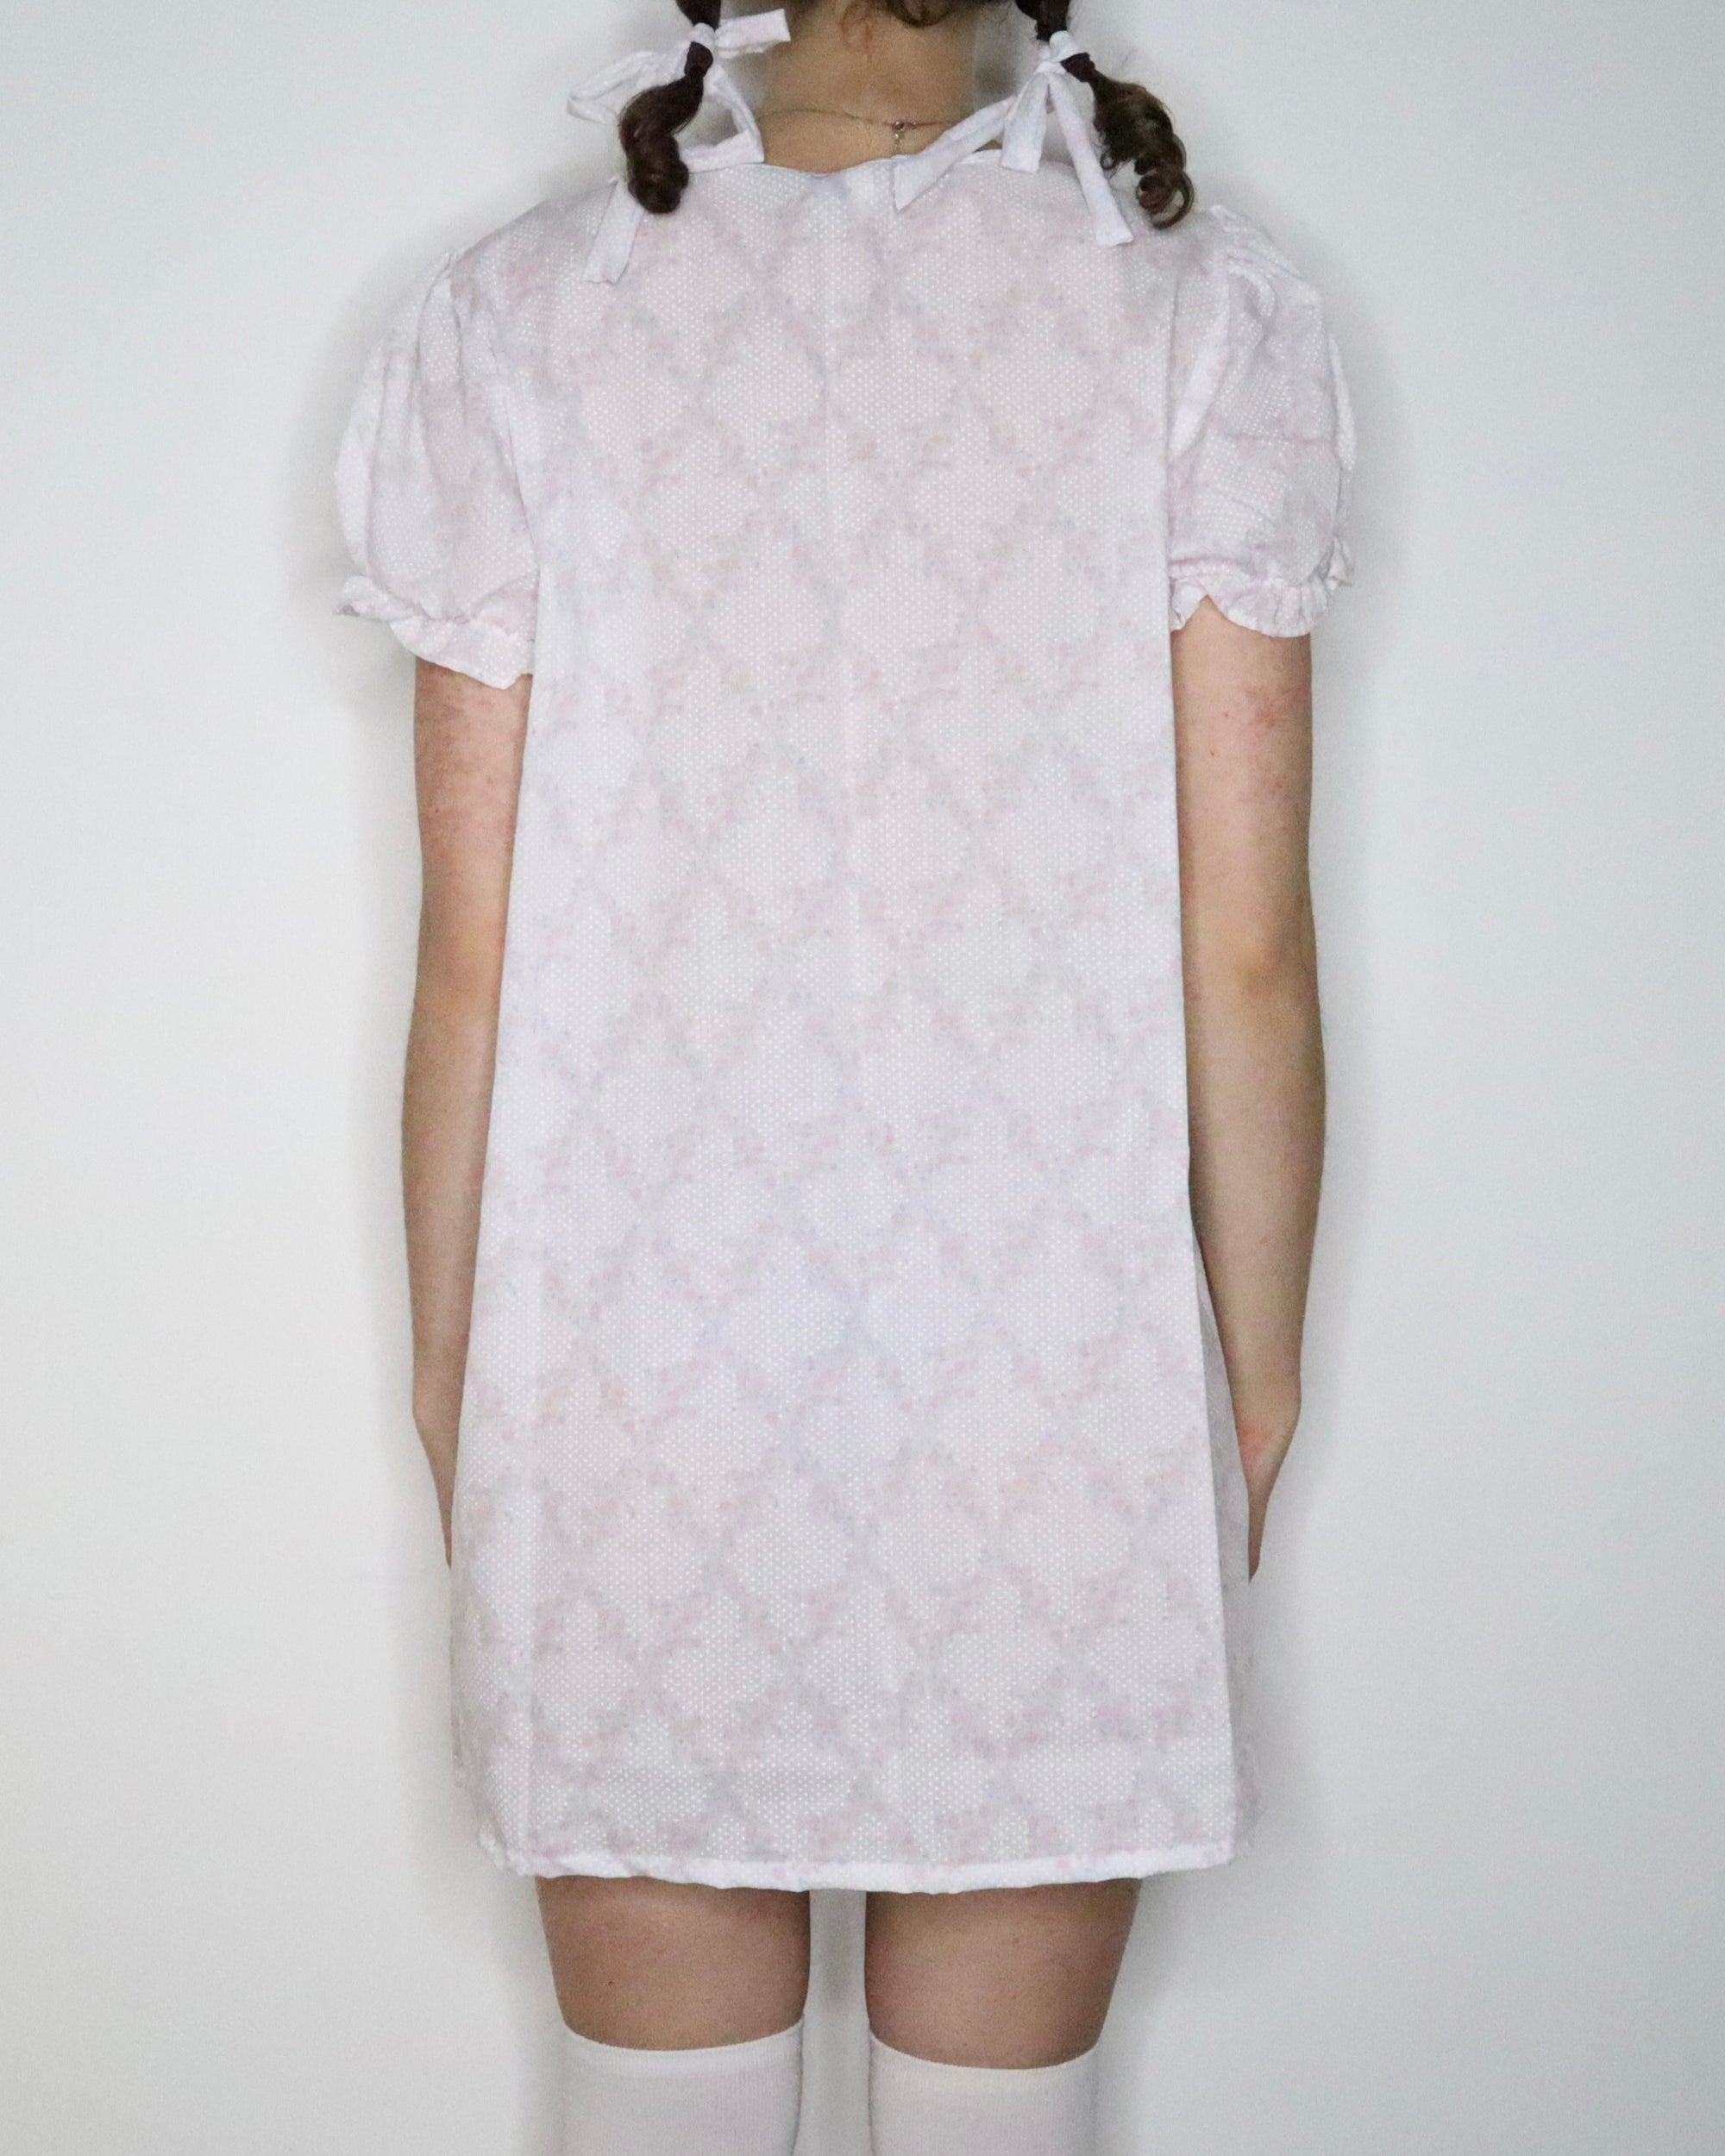 Pastel Babydoll Nightgown (Large) 